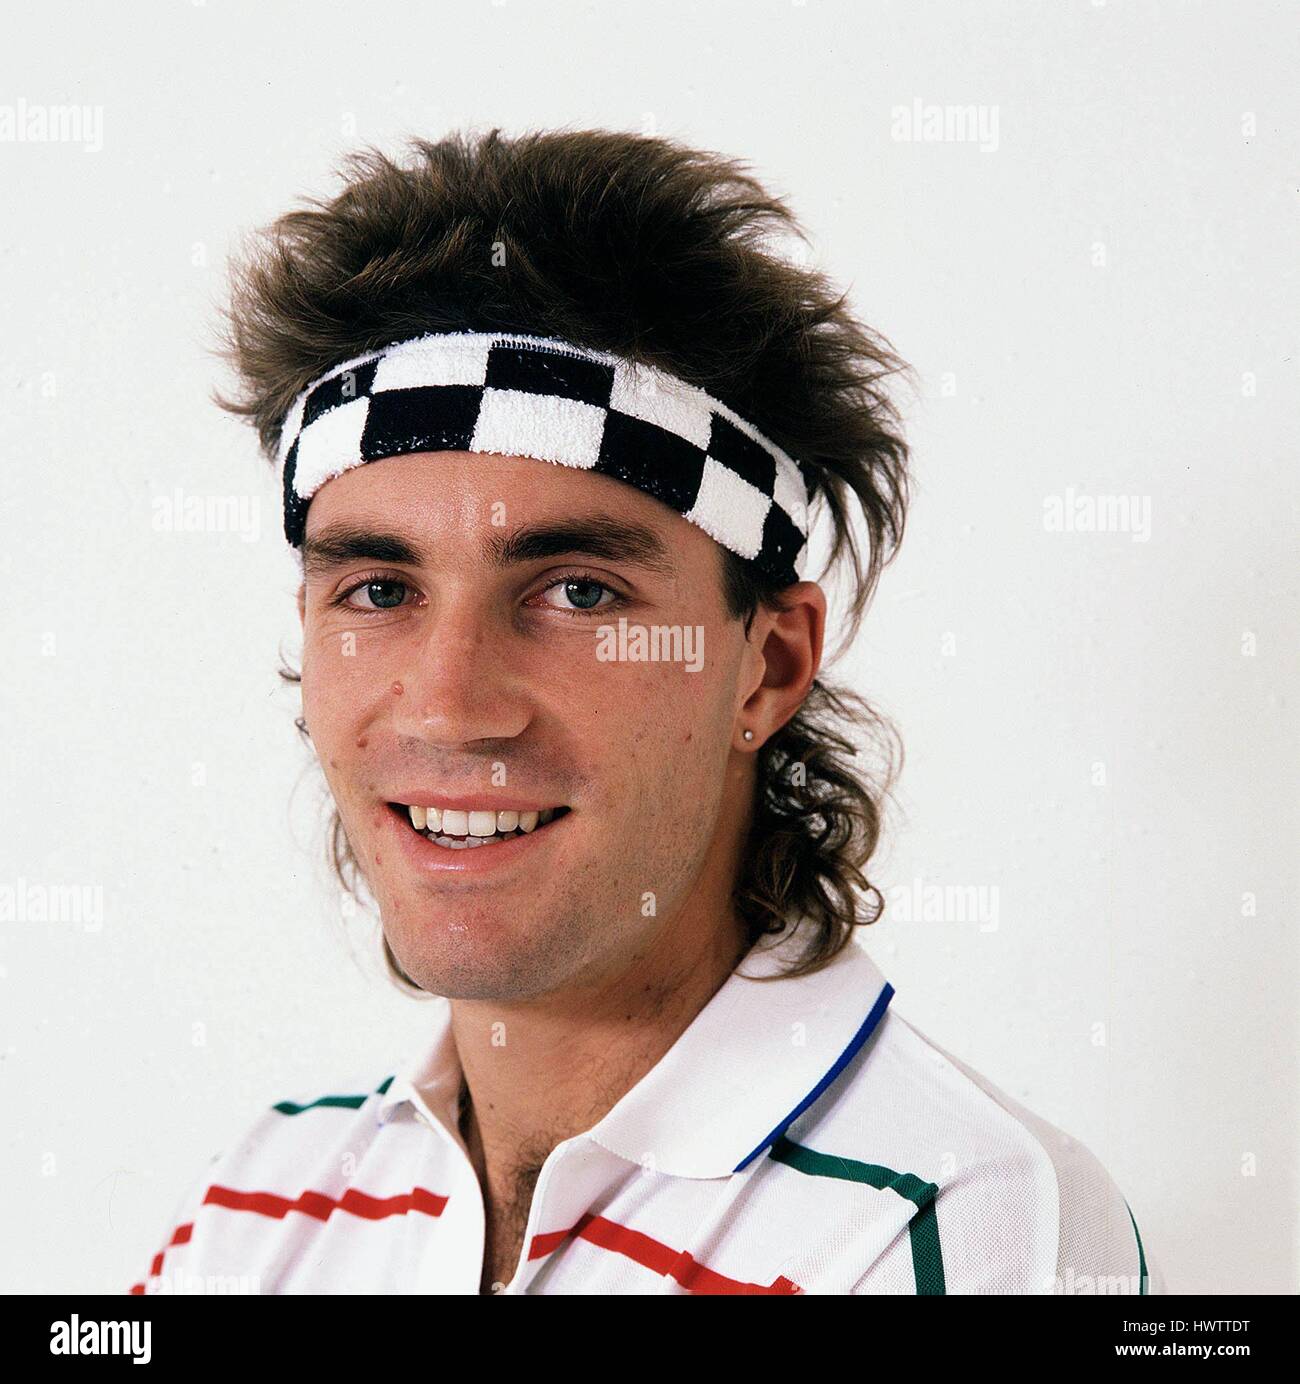 PAT CASH-TENNIS-Spieler 1. Juli 1987 Stockfotografie - Alamy